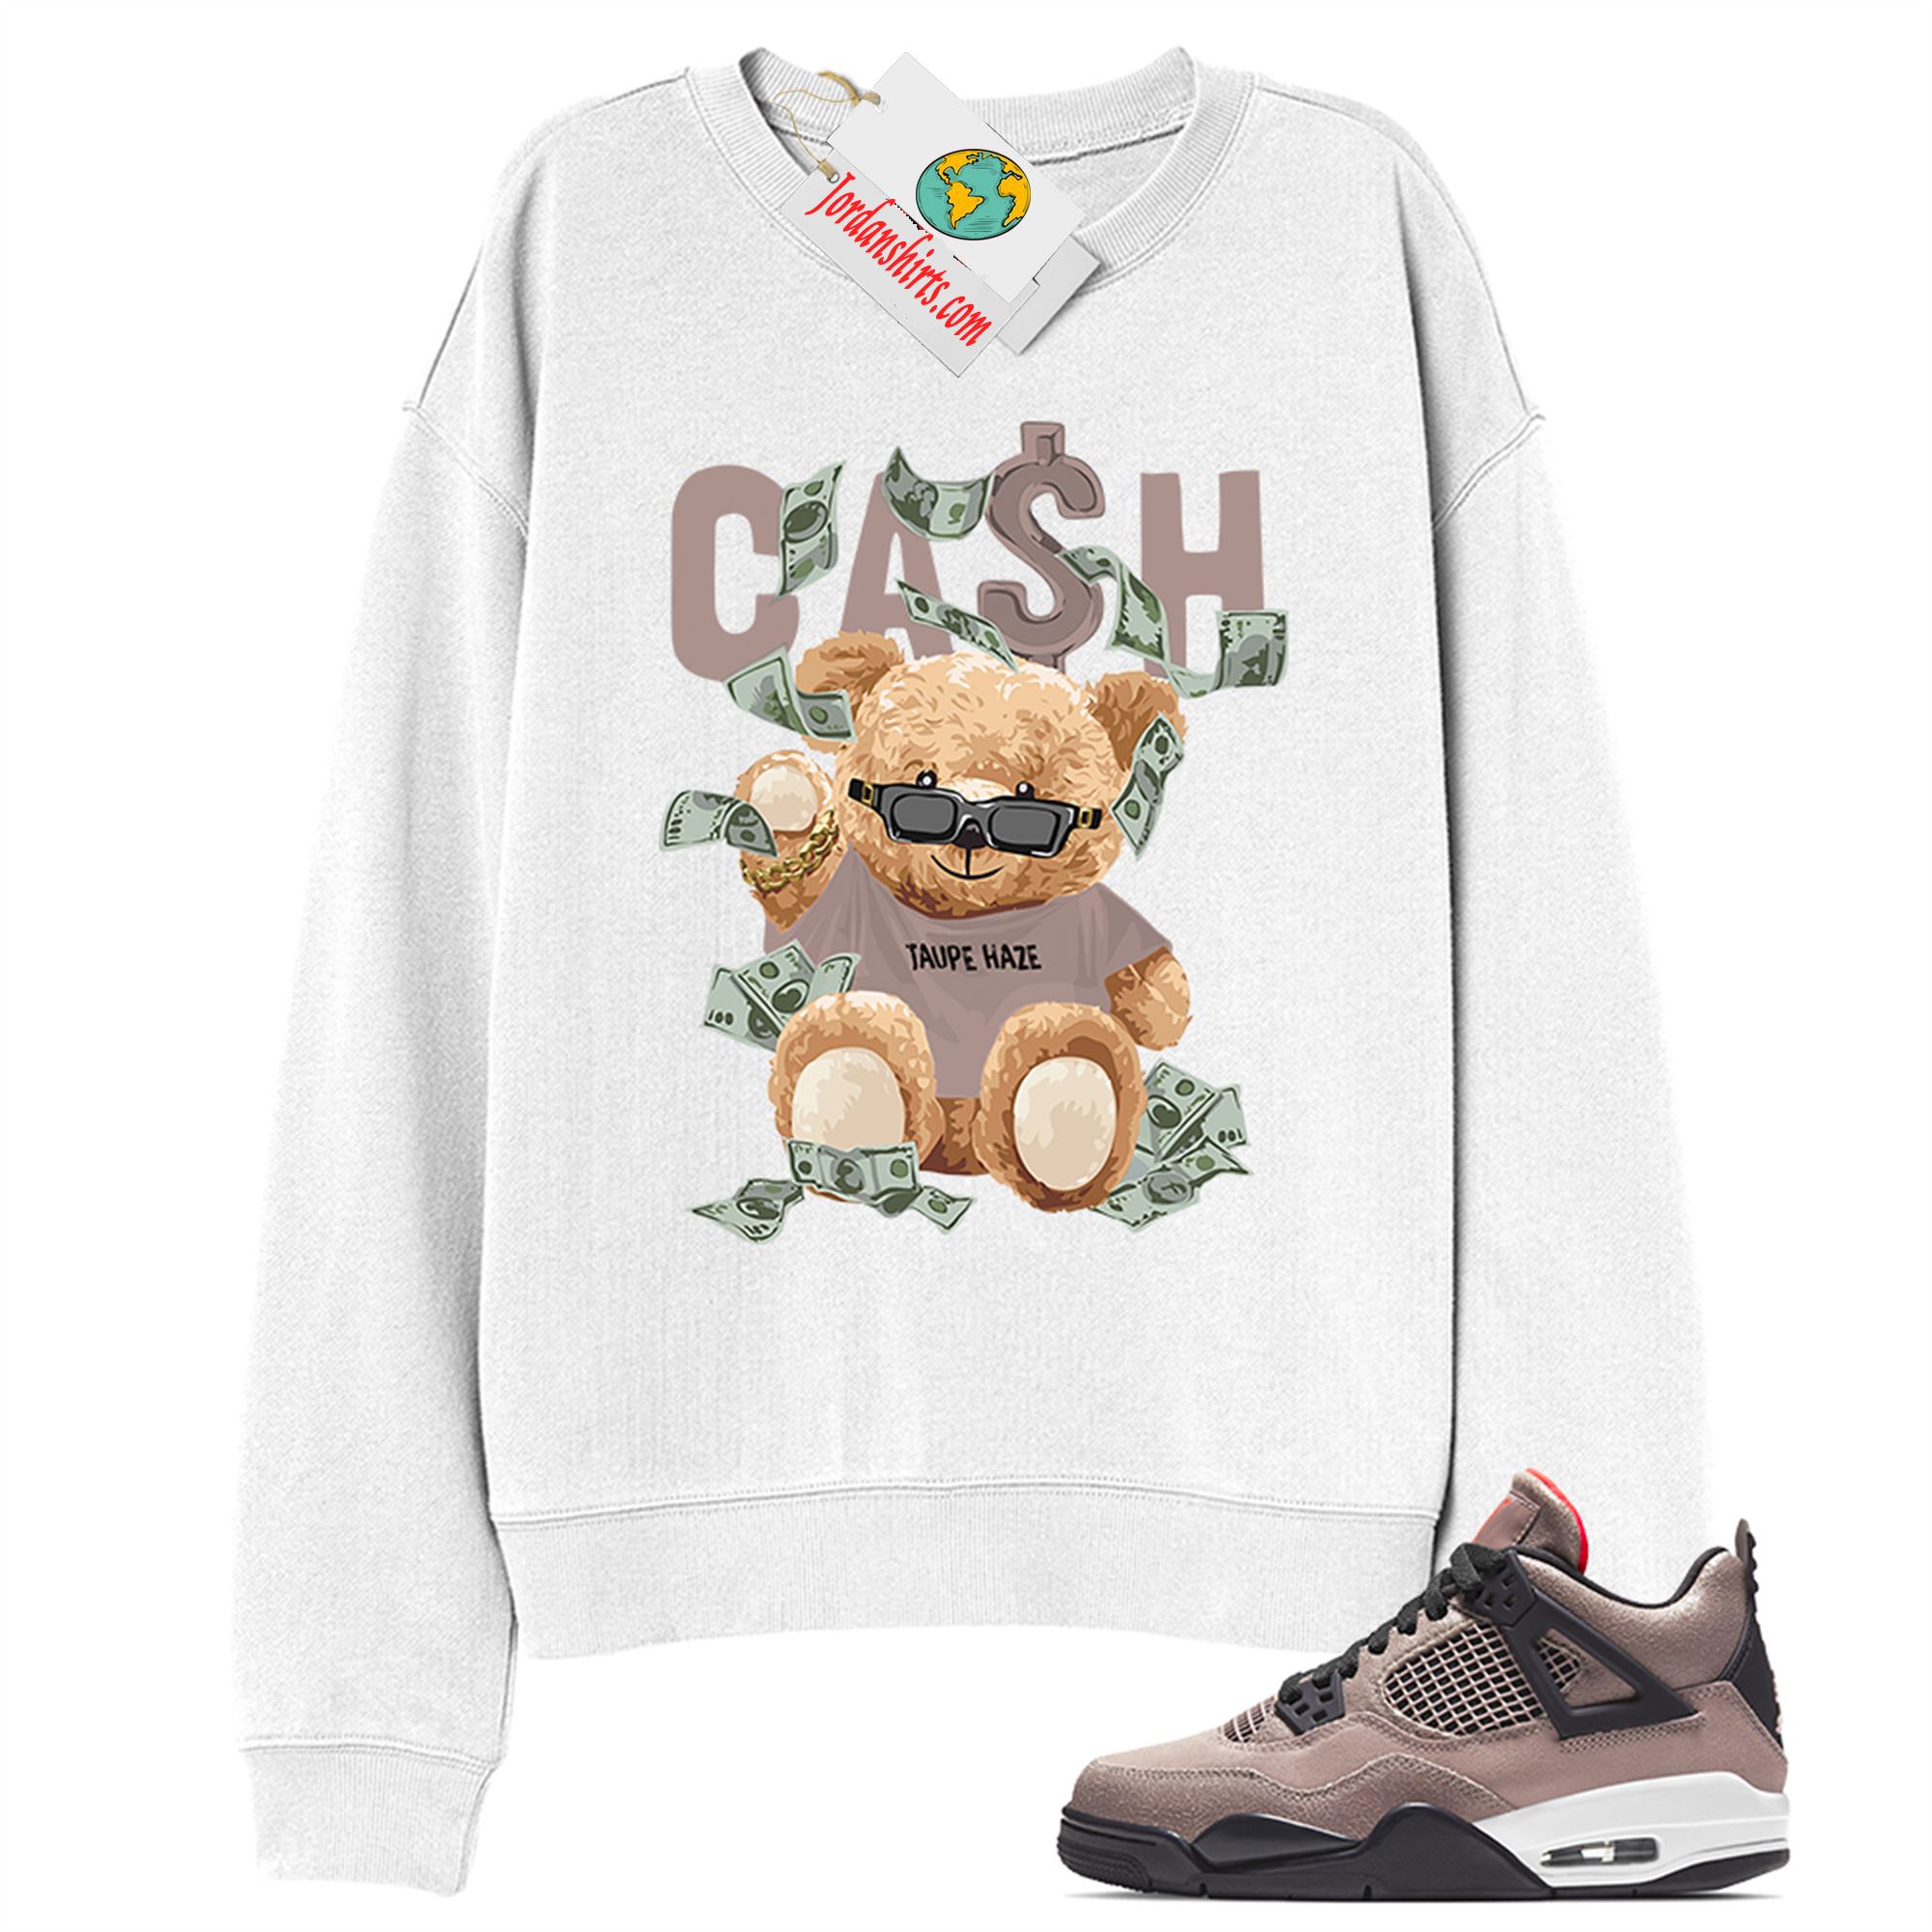 Jordan 4 Sweatshirt, Cash Teddy Bear In Sunglasses White Sweatshirt Air Jordan 4 Taupe Haze 4s Full Size Up To 5xl